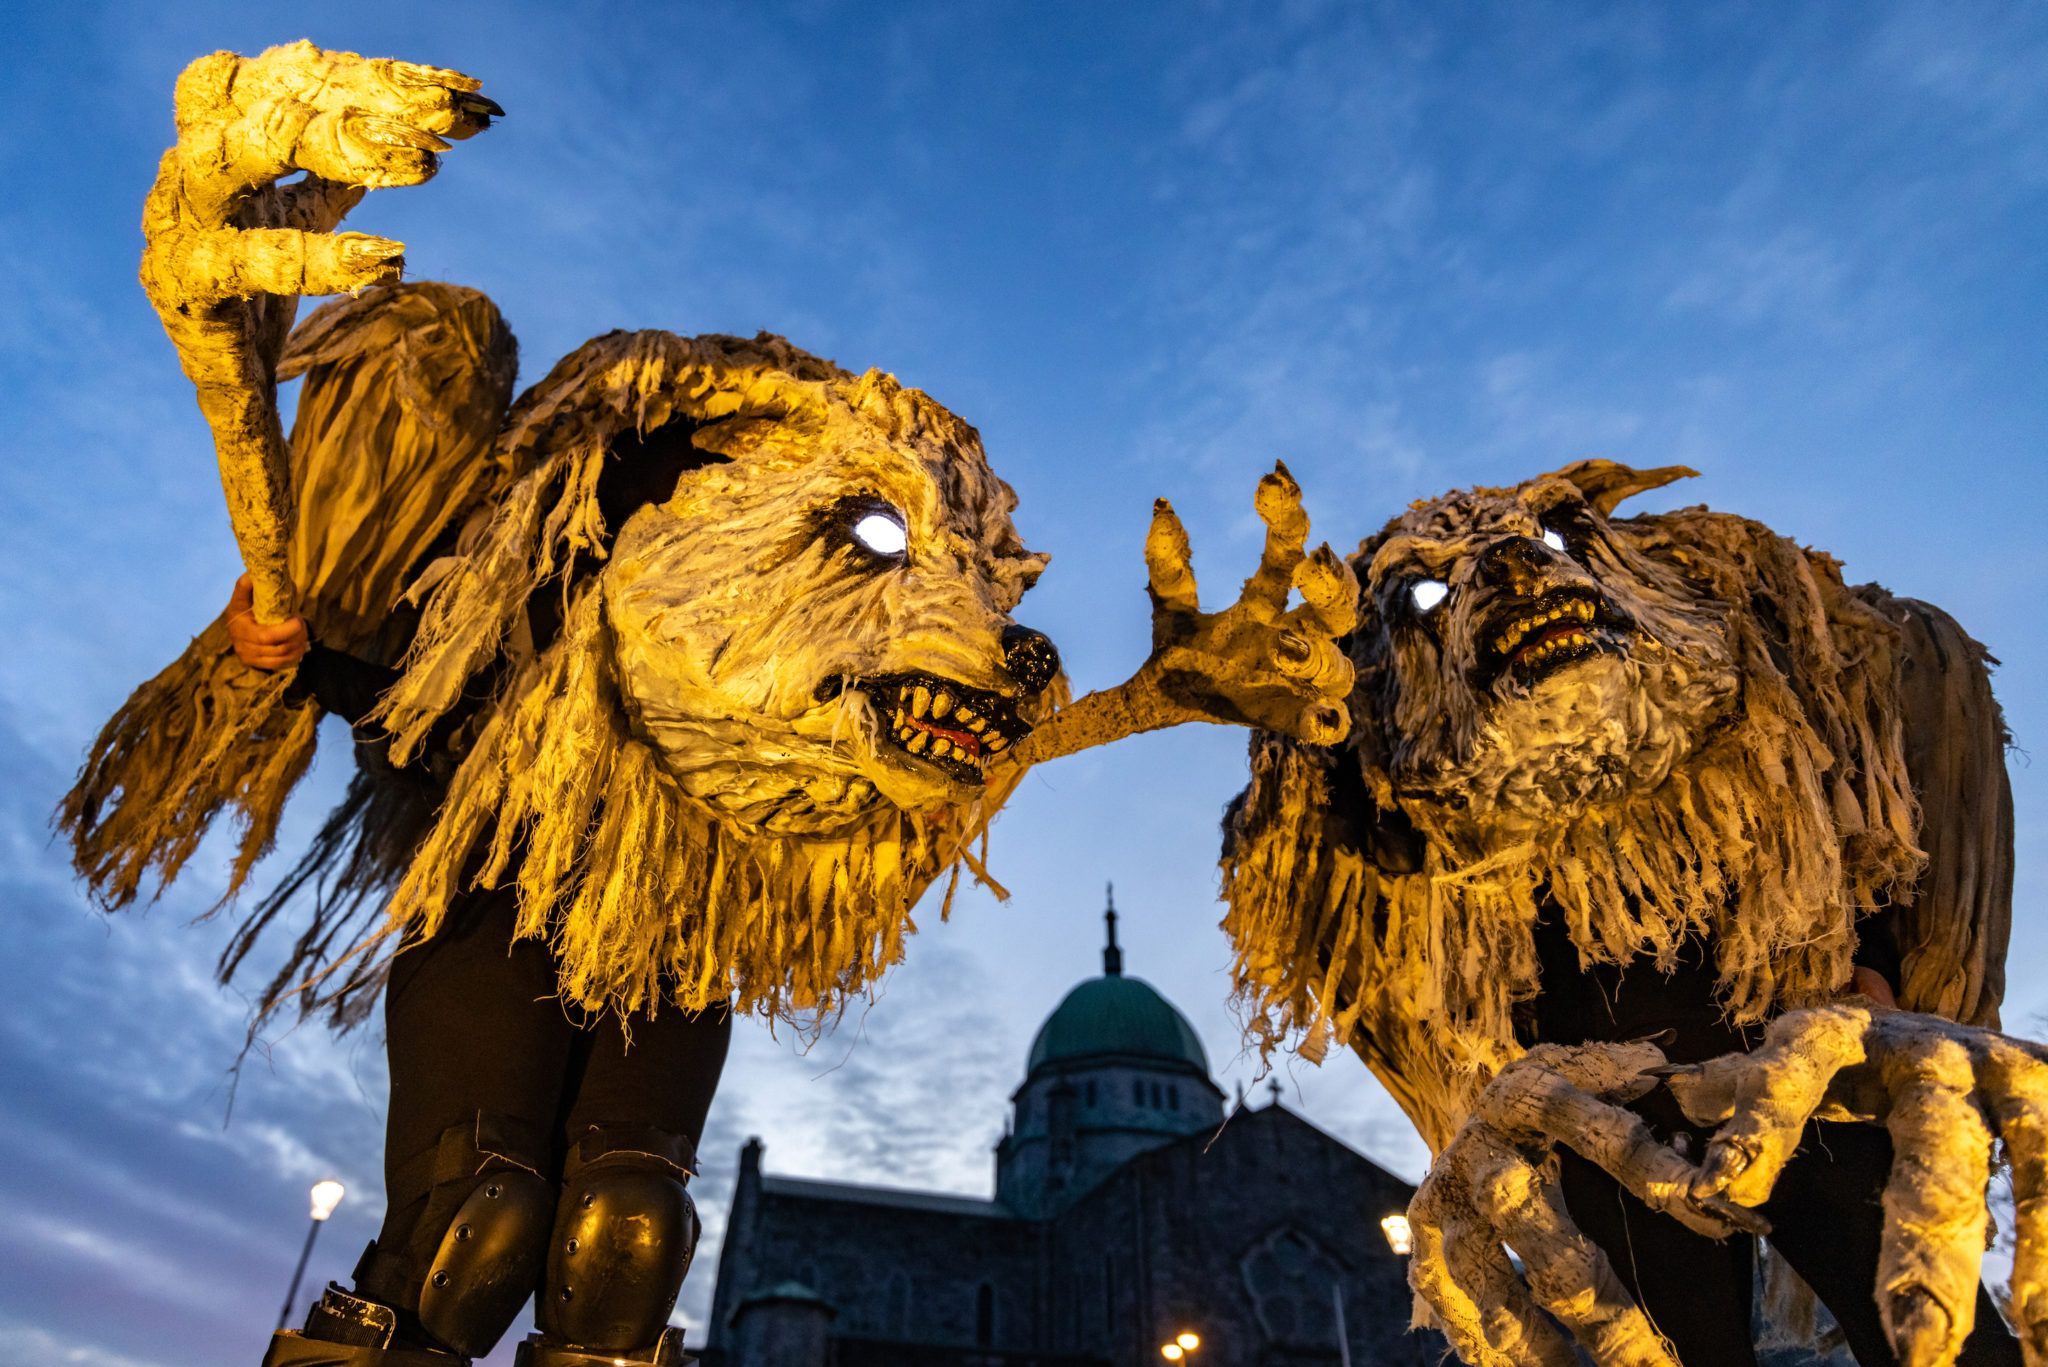 Macnas Halloween parade returns to Galway after four-year break